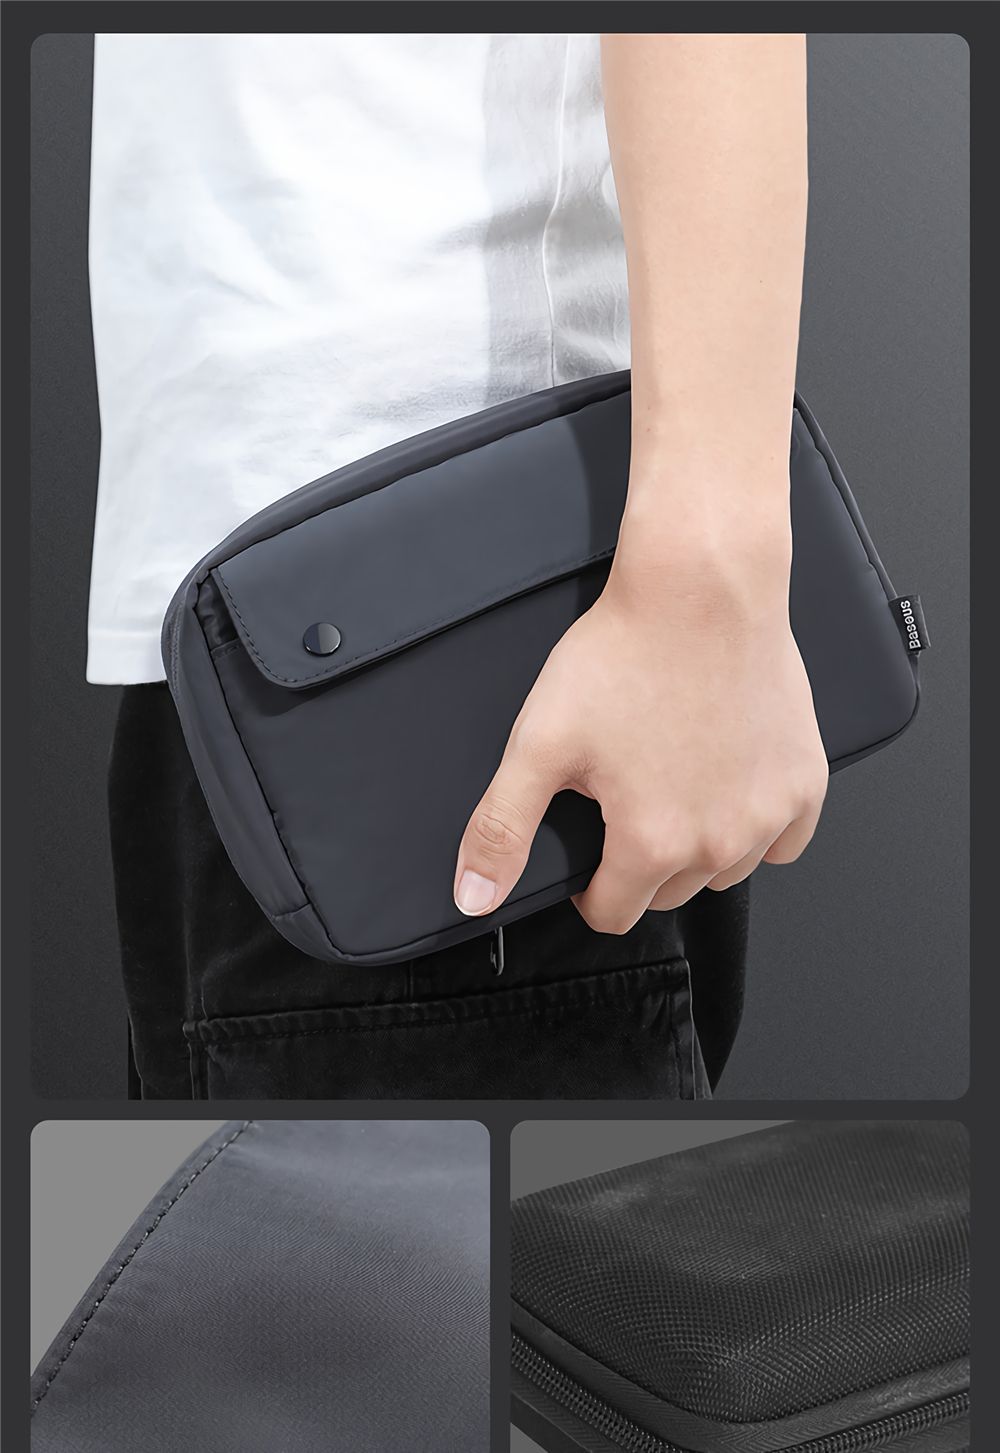 Baseus-Bag-Portable-Waterproof-Multi-functional-Laptop-Storage-Bag-Electronic-Accessories-Travel-Org-1713201